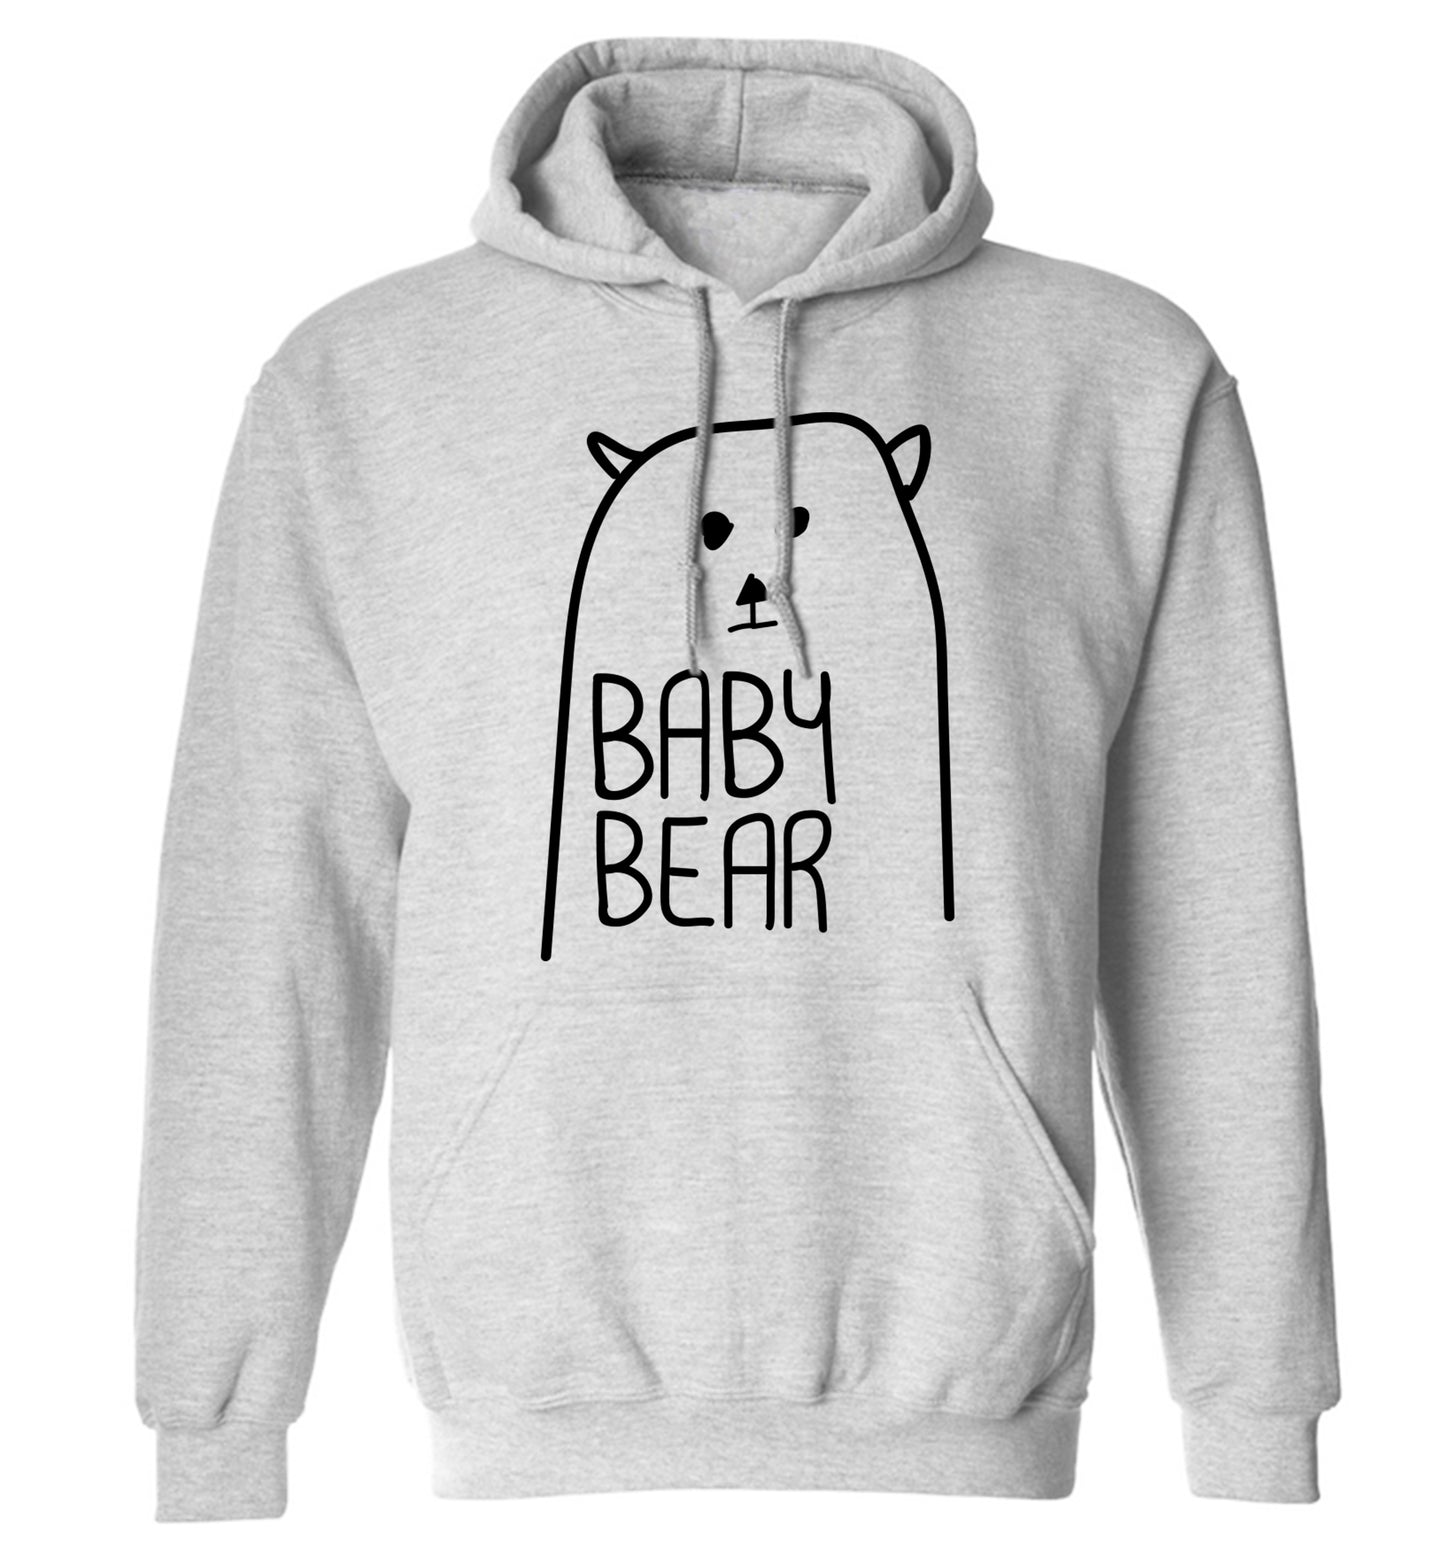 Baby bear adults unisex grey hoodie 2XL